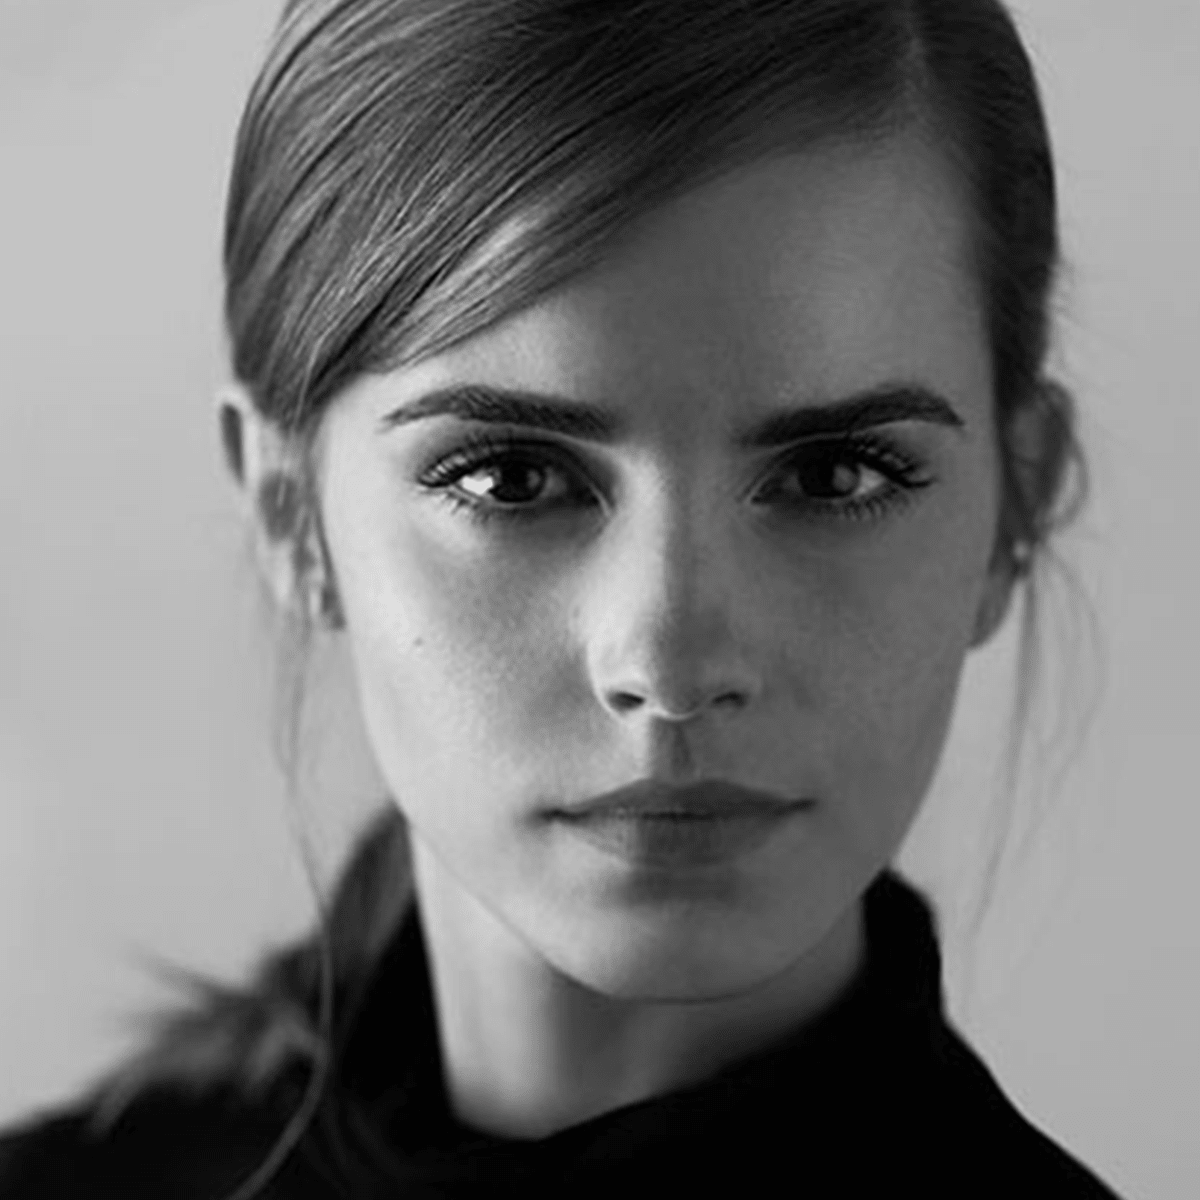 Emma Watson Monochrome 2017 Wallpapers